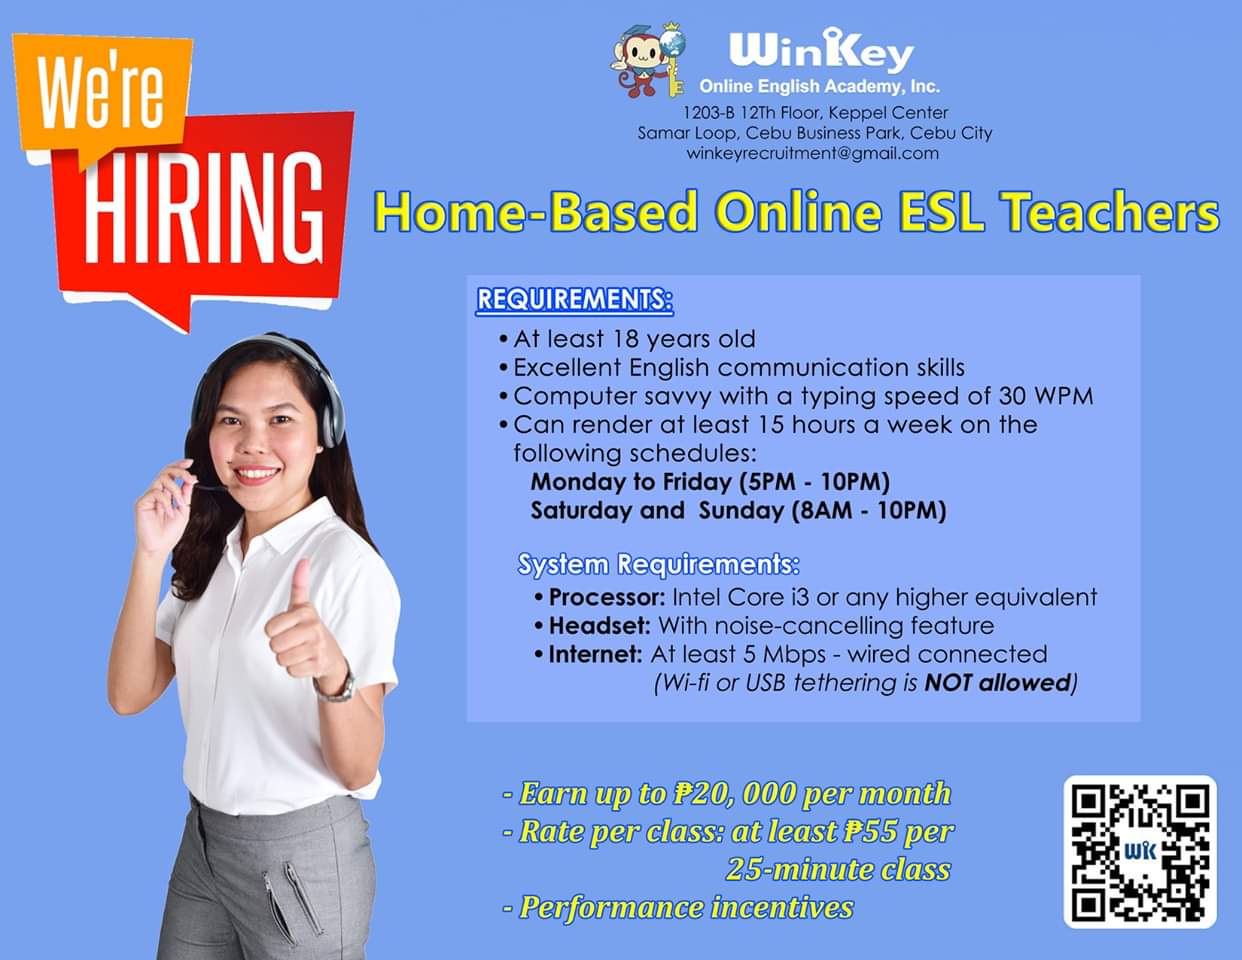 WinKey Online English Academy Hiring Homebased ESL Teachers Now!